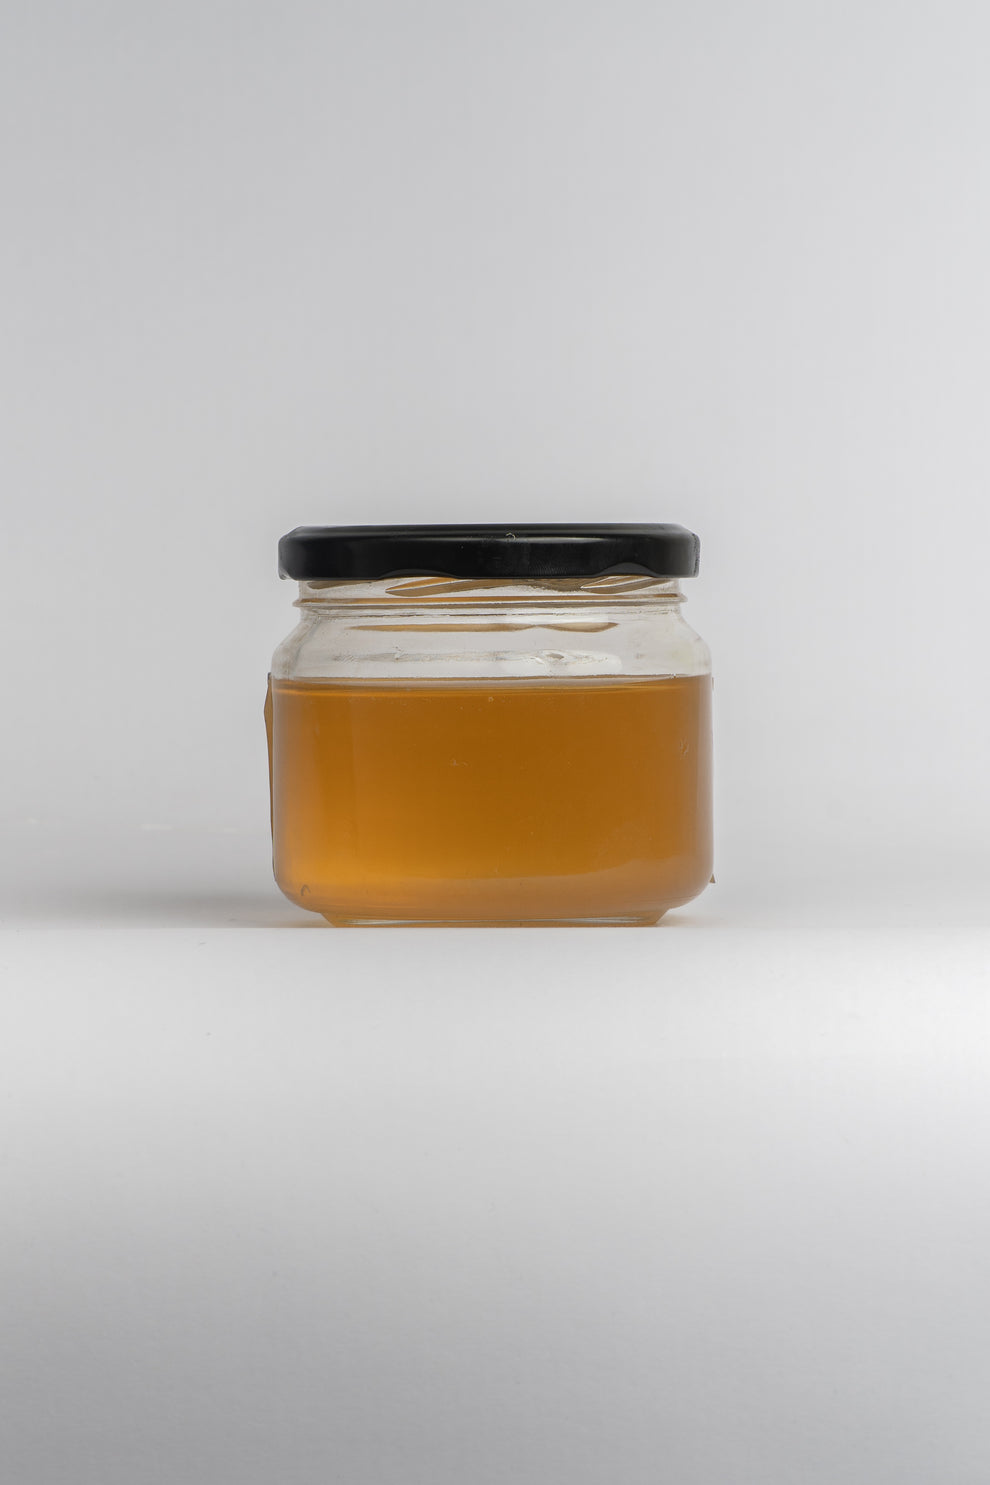 Product: Greenseed Kashmir Acacia Honey (300 ml)